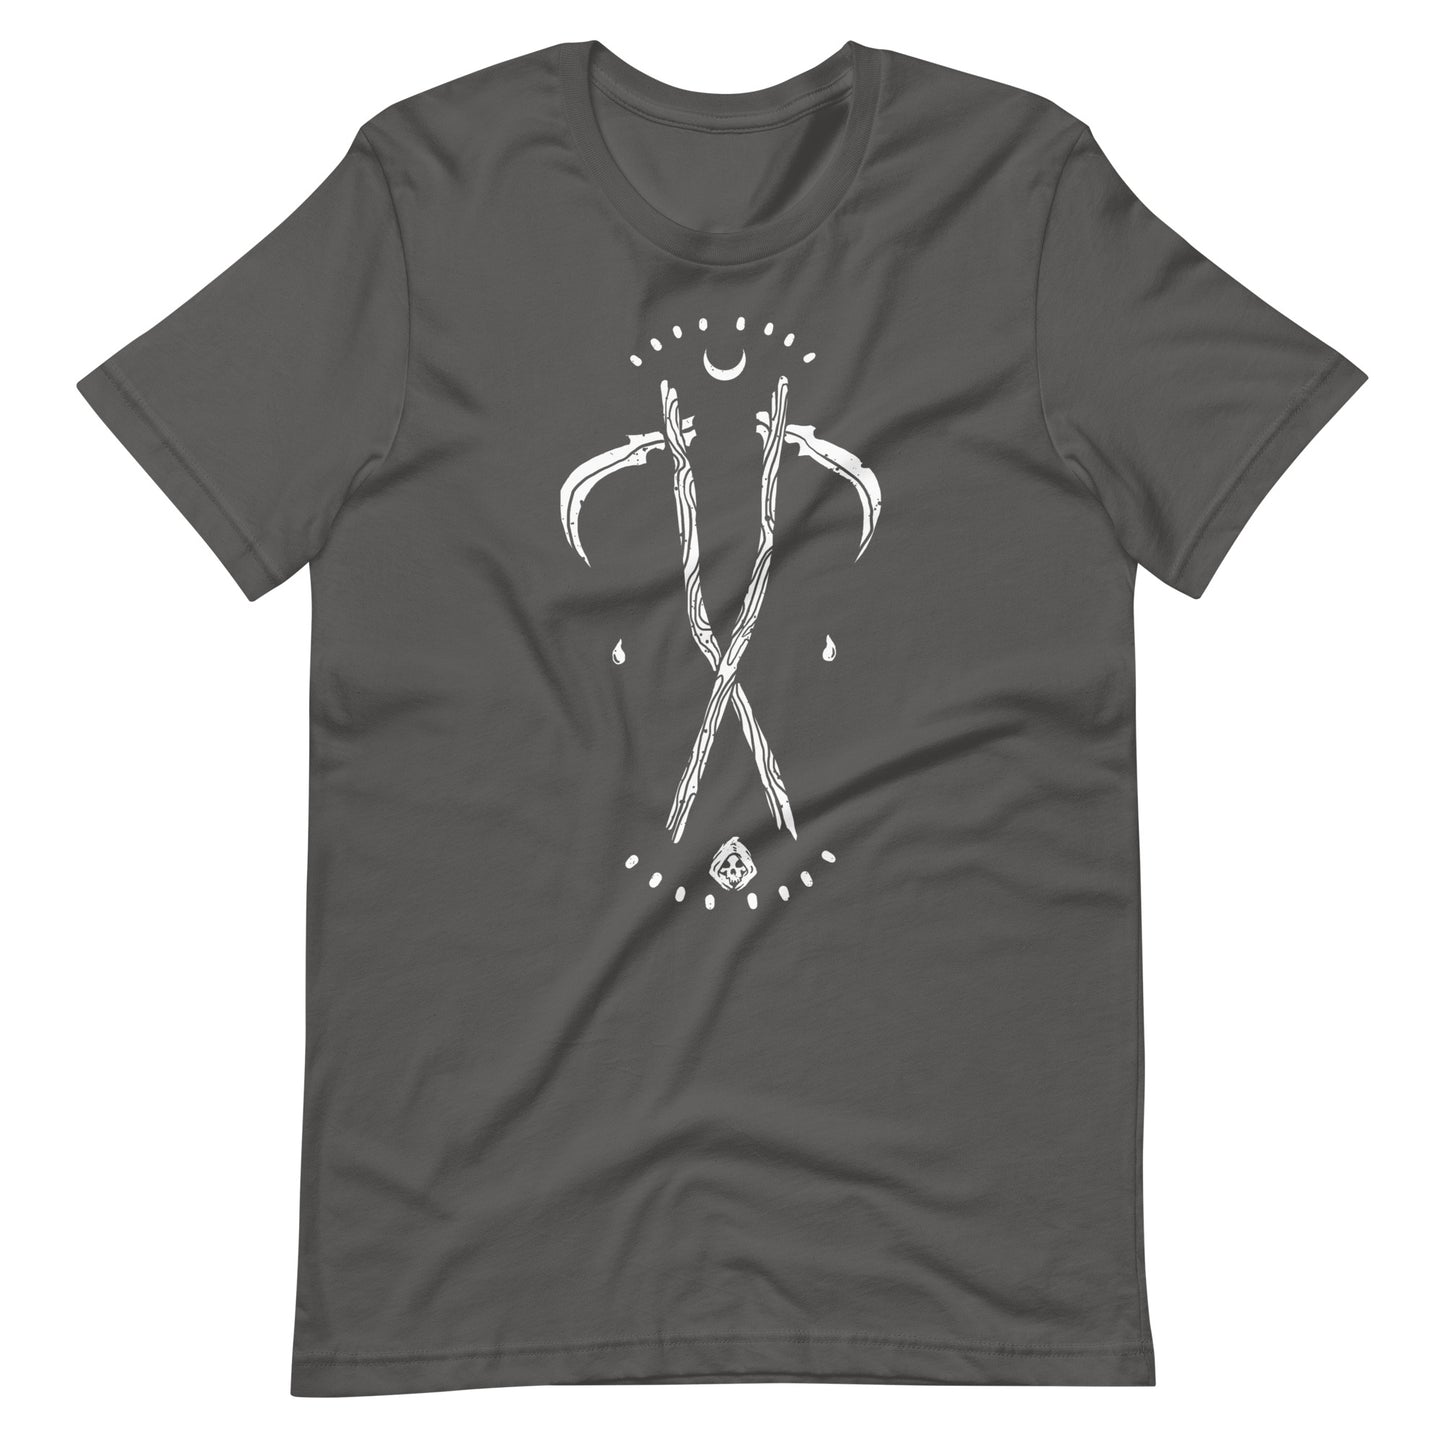 Grim - Men's t-shirt - Asphalt Front